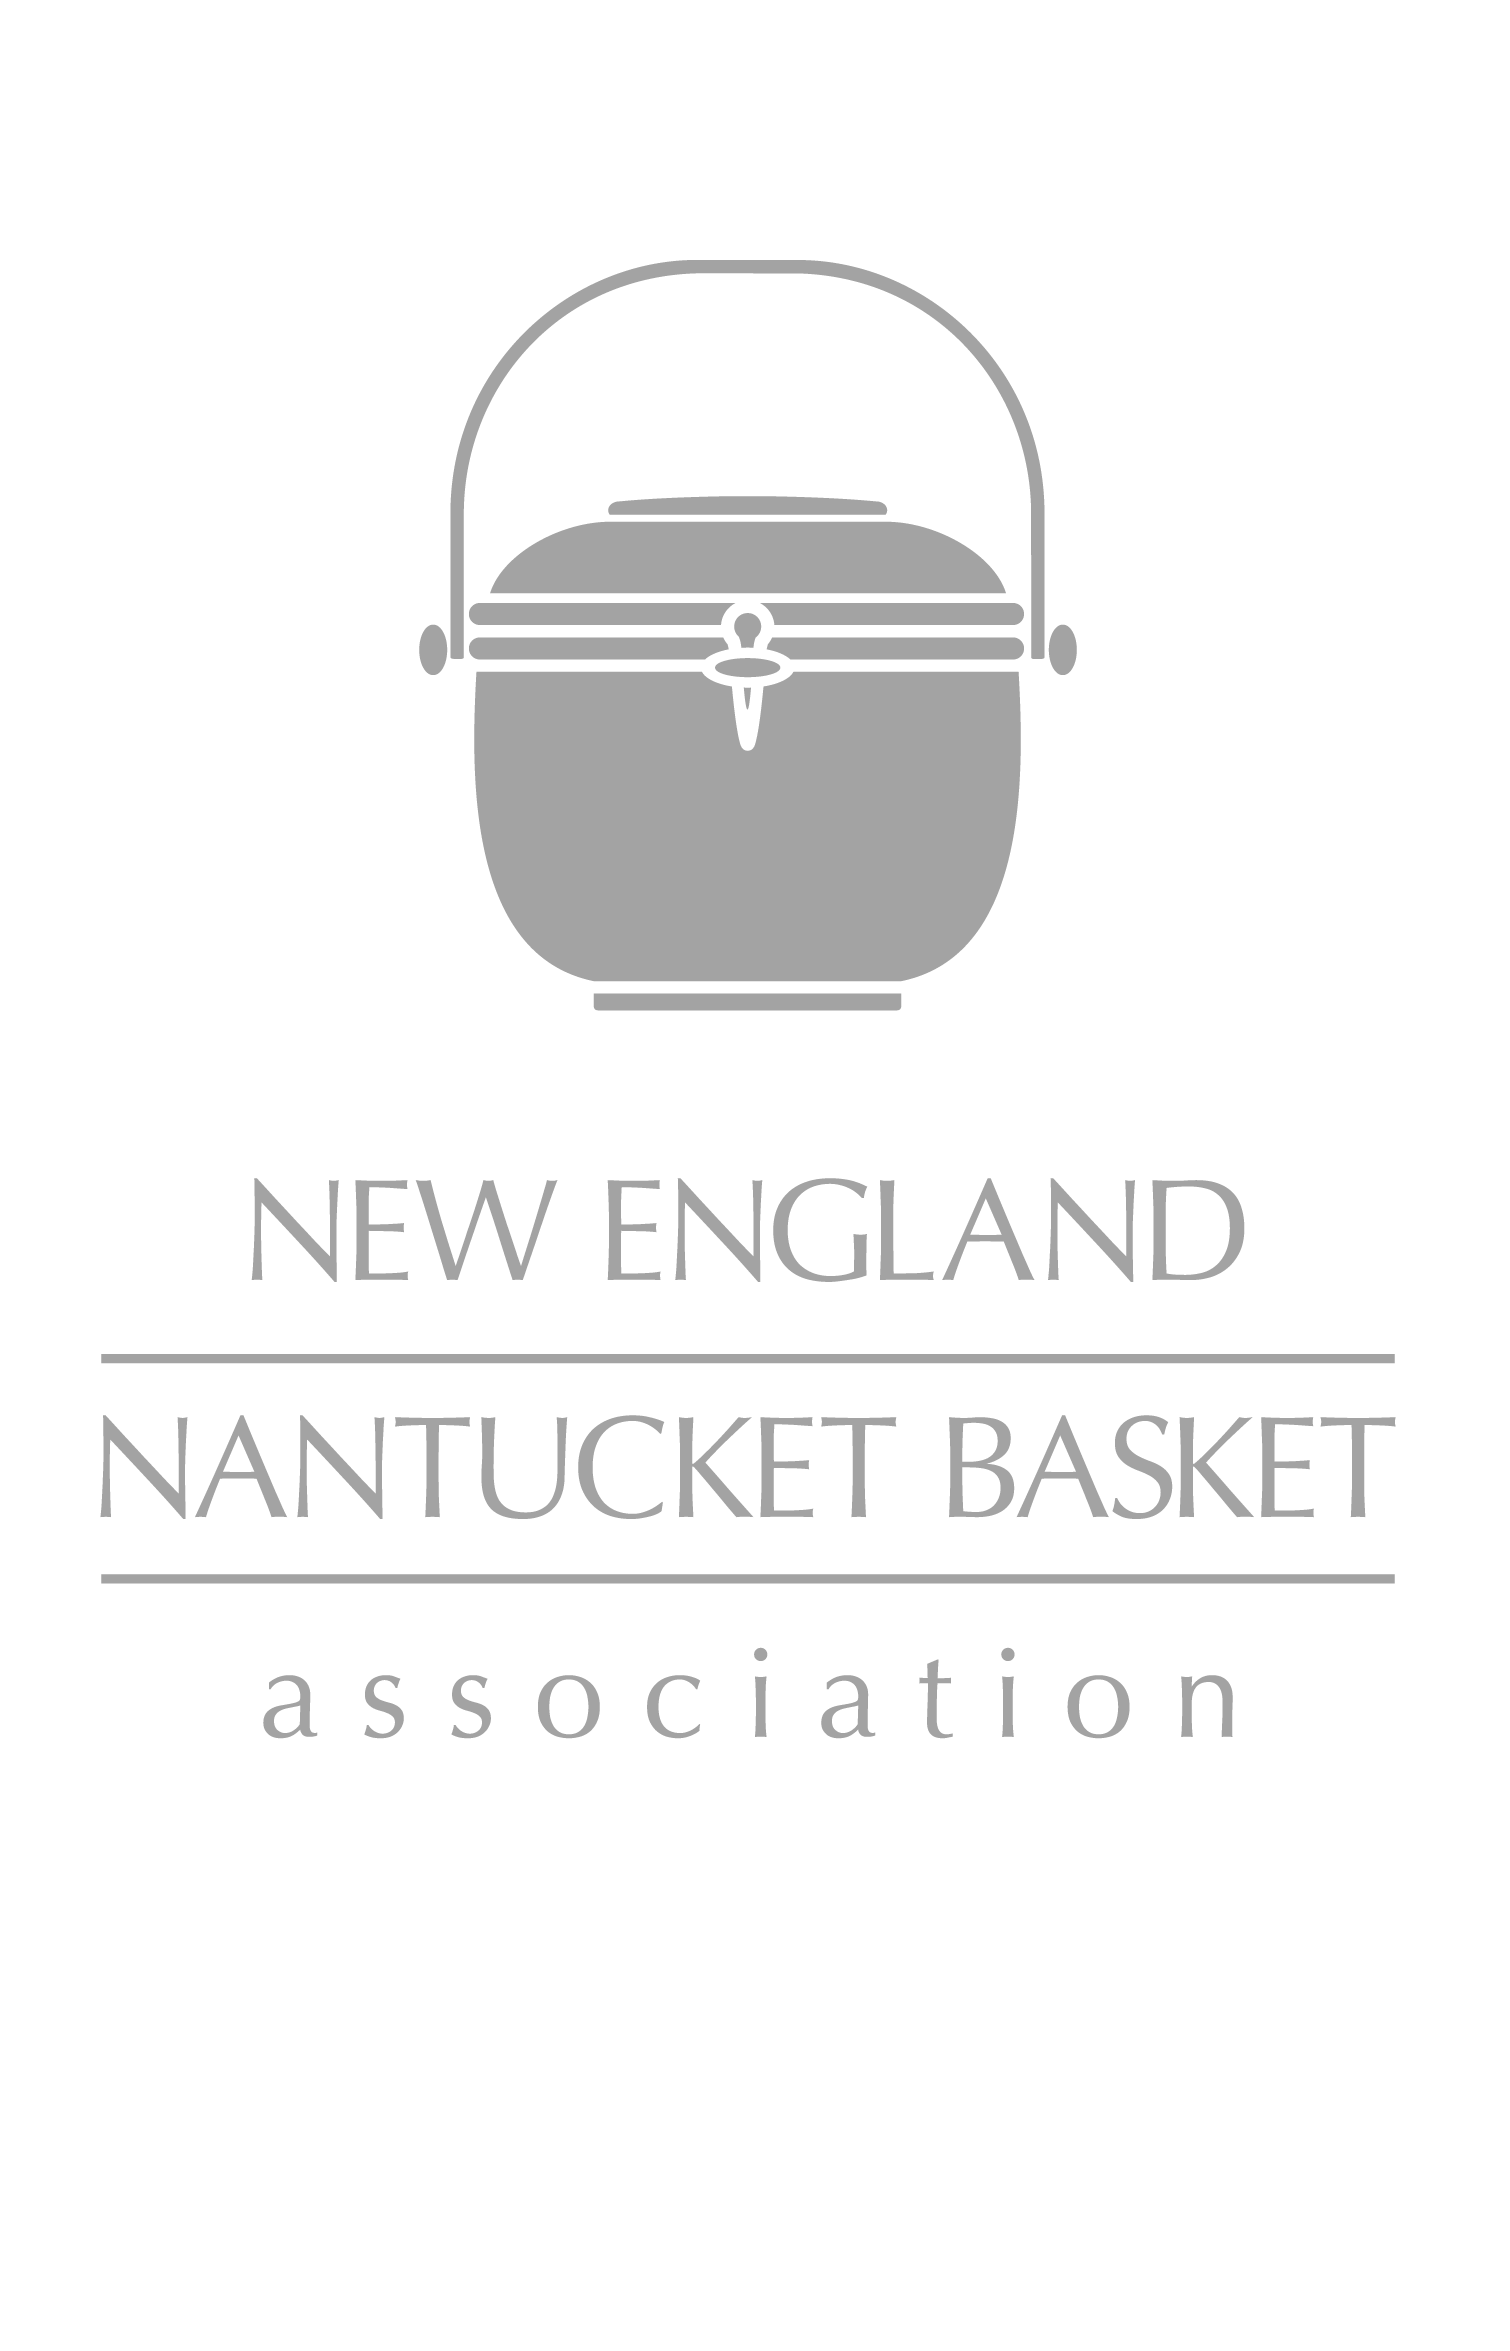 New England Nantucket Basket Association